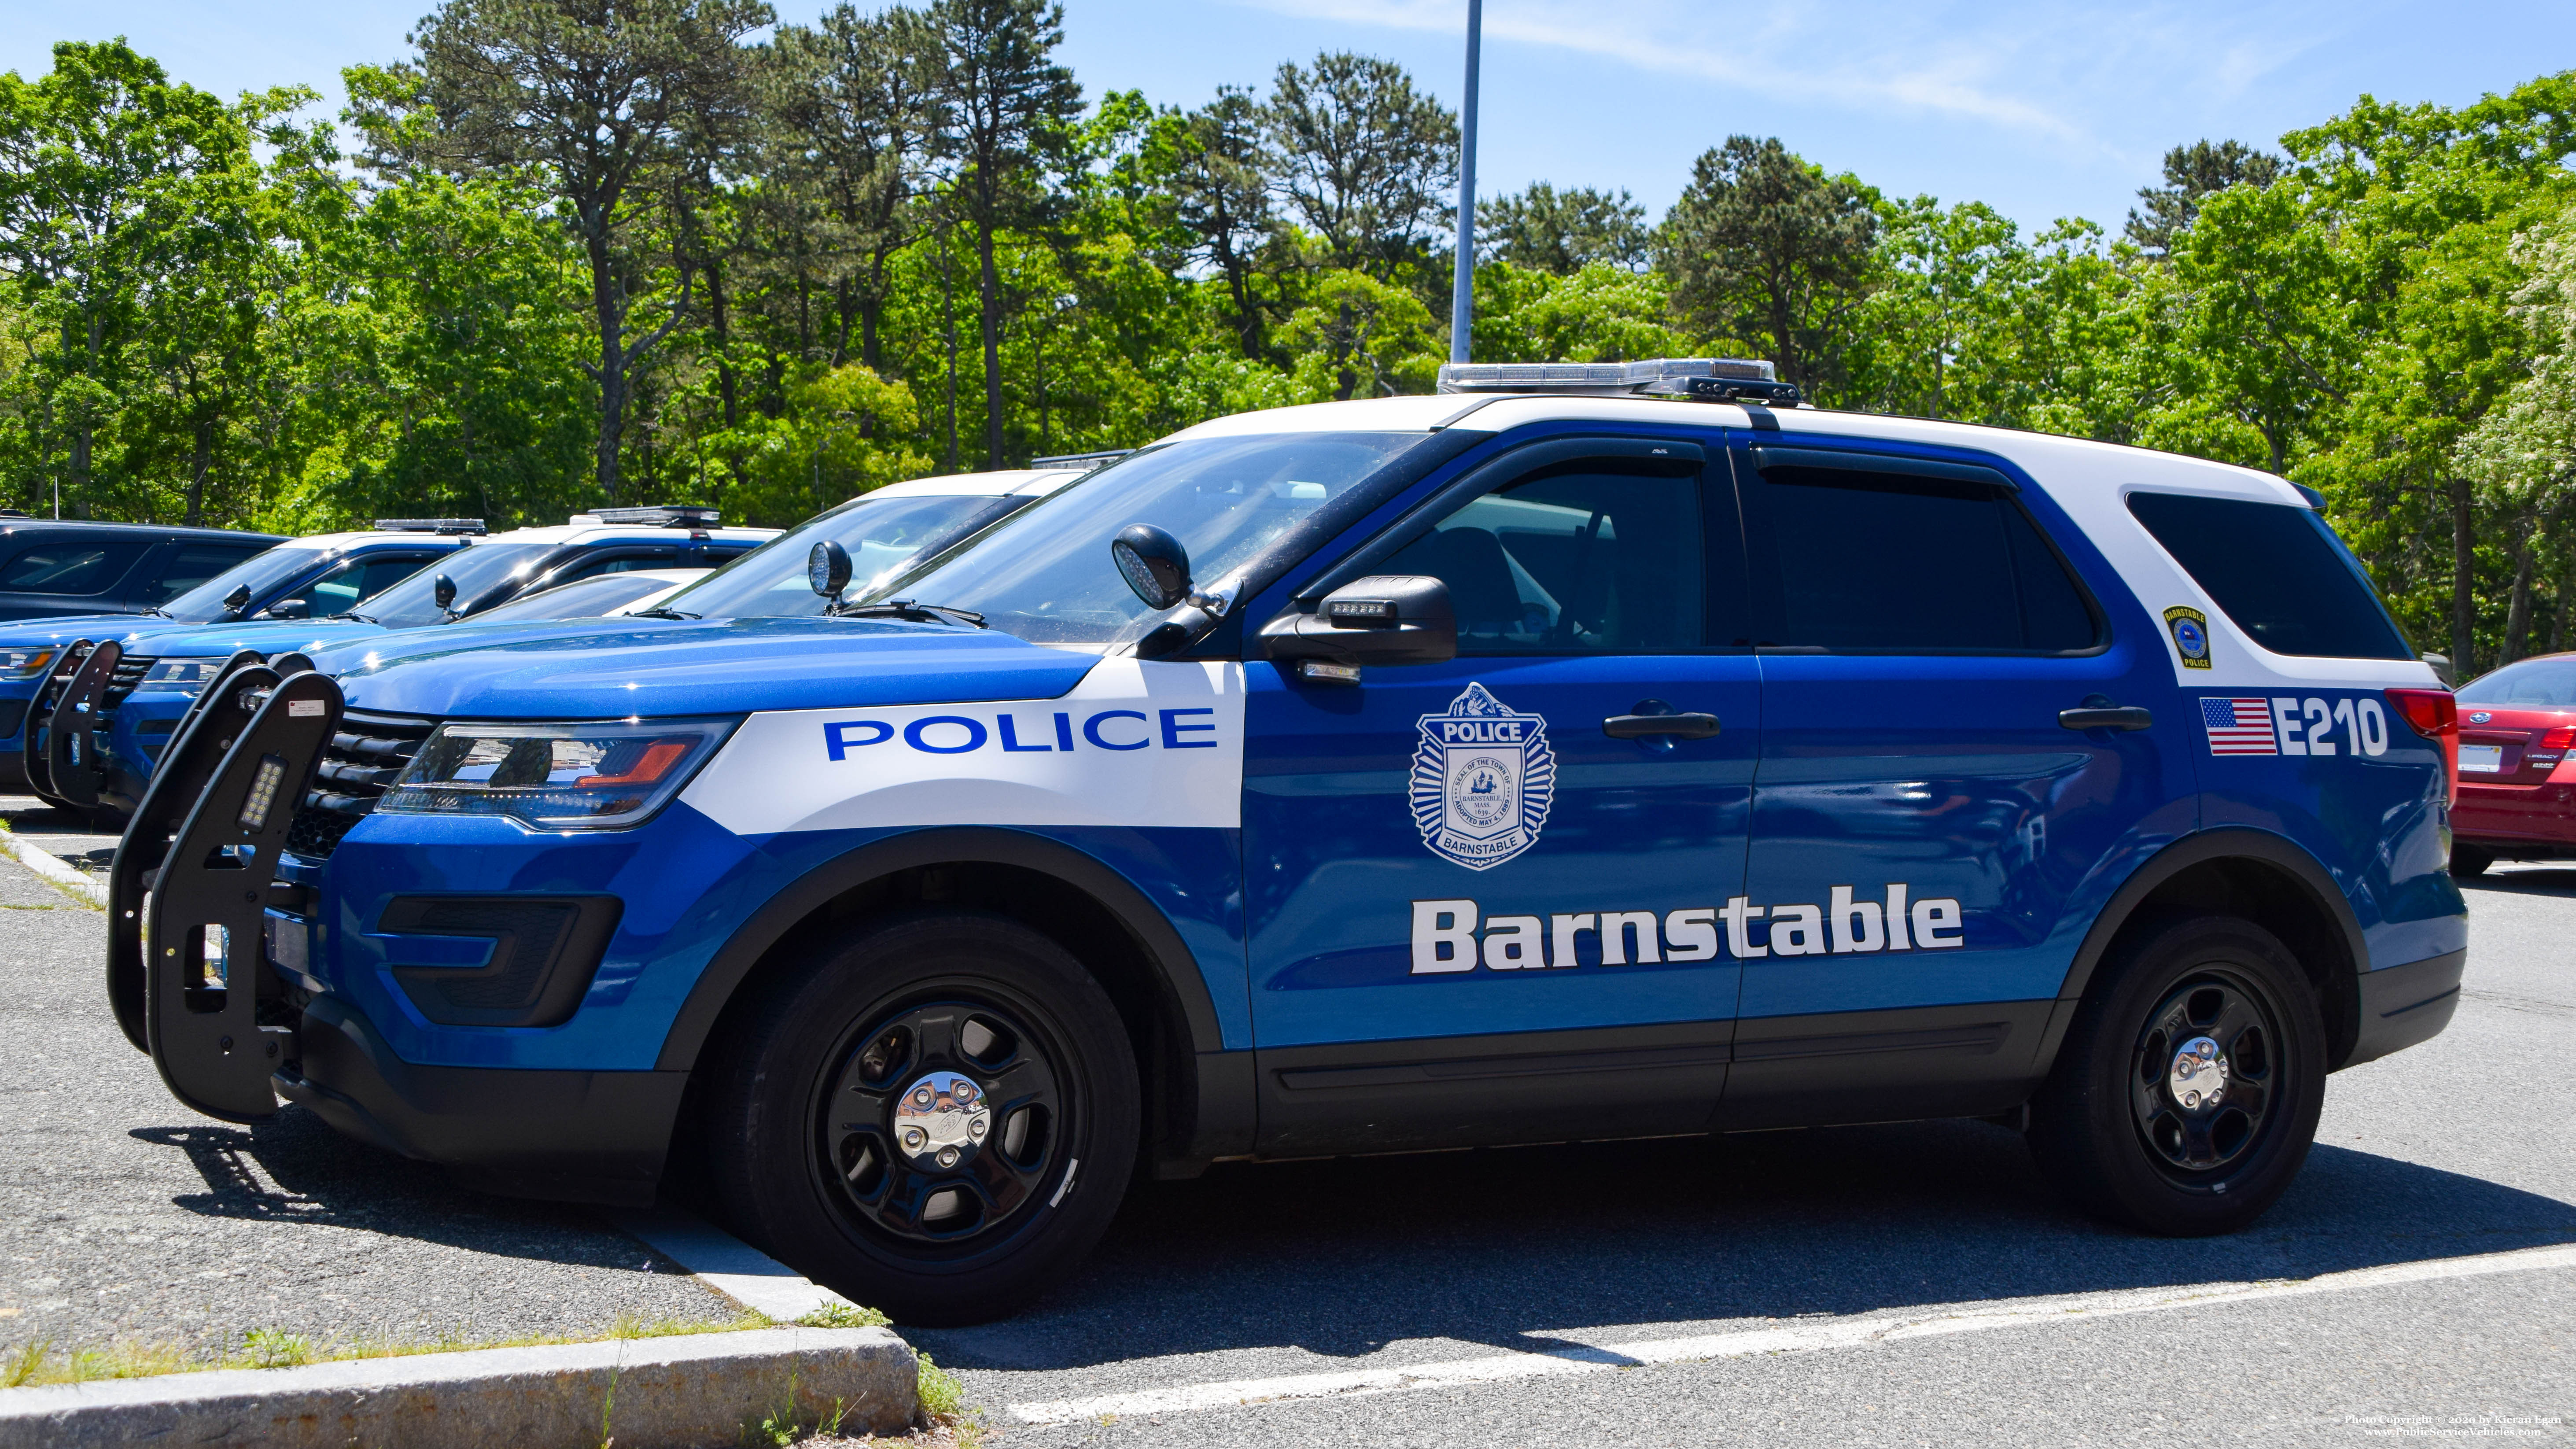 A photo  of Barnstable Police
            E-210, a 2018 Ford Police Interceptor Utility             taken by Kieran Egan